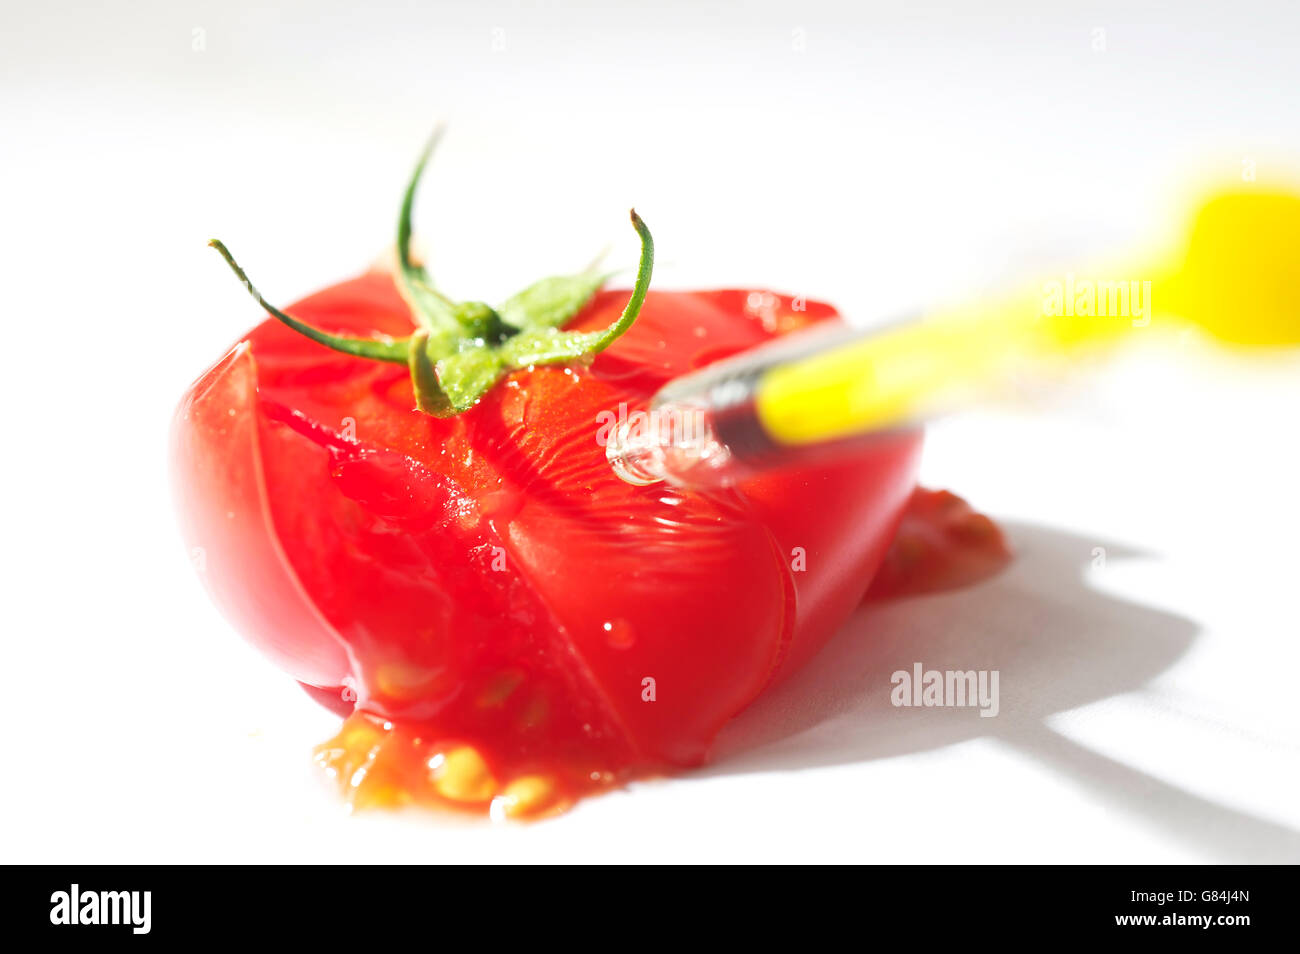 genetically modified crops tomato or transgenic tomato Stock Photo